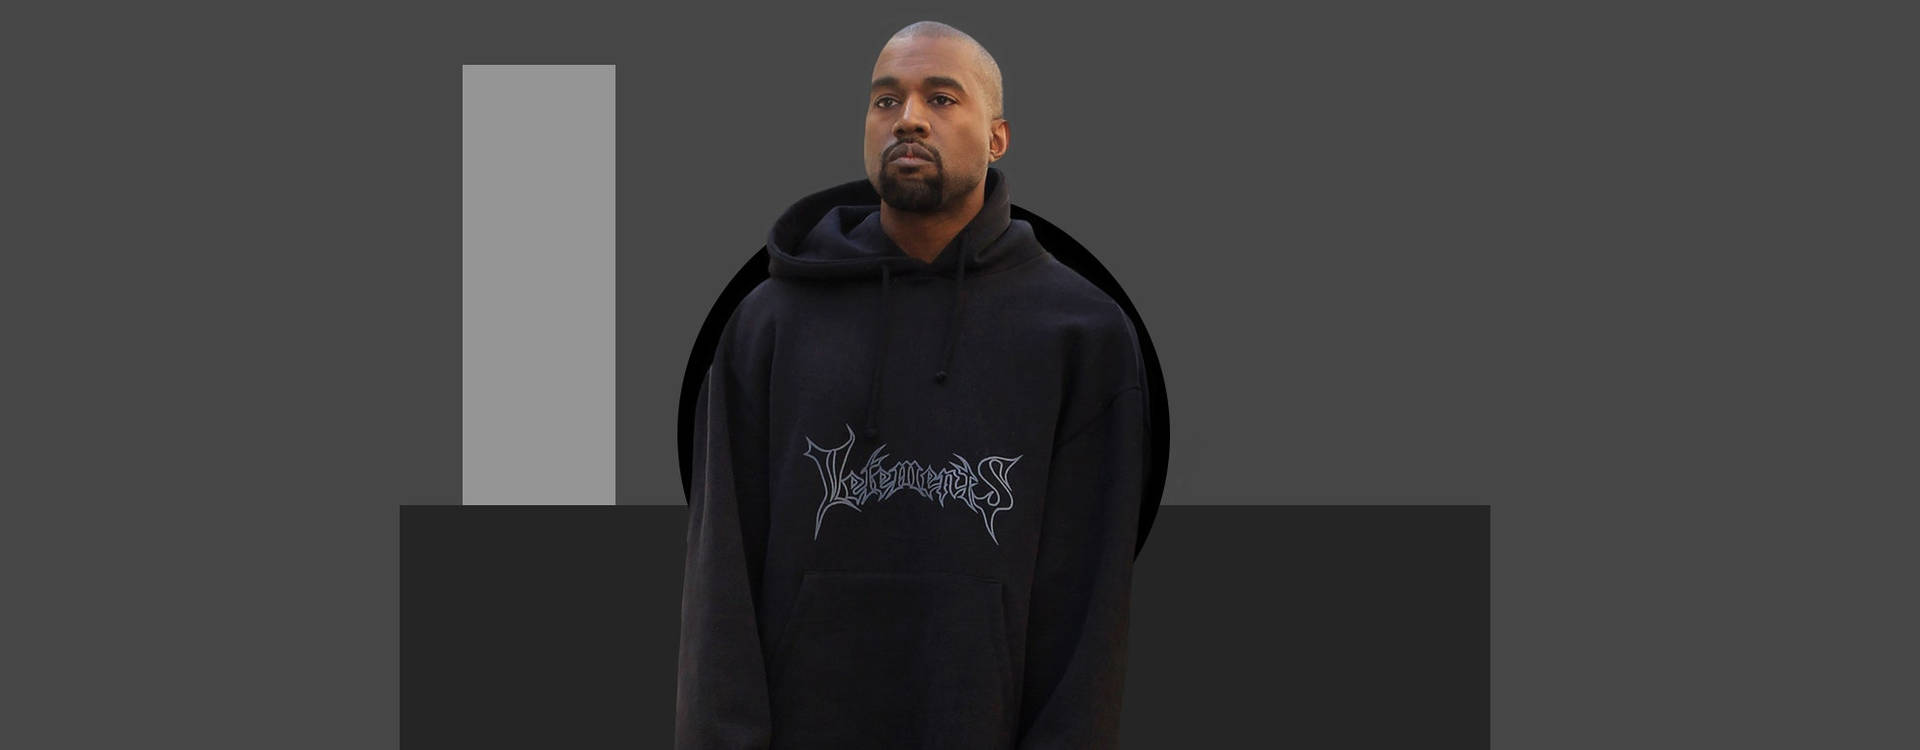 Kanye West Vetements Photoshoot Wallpaper